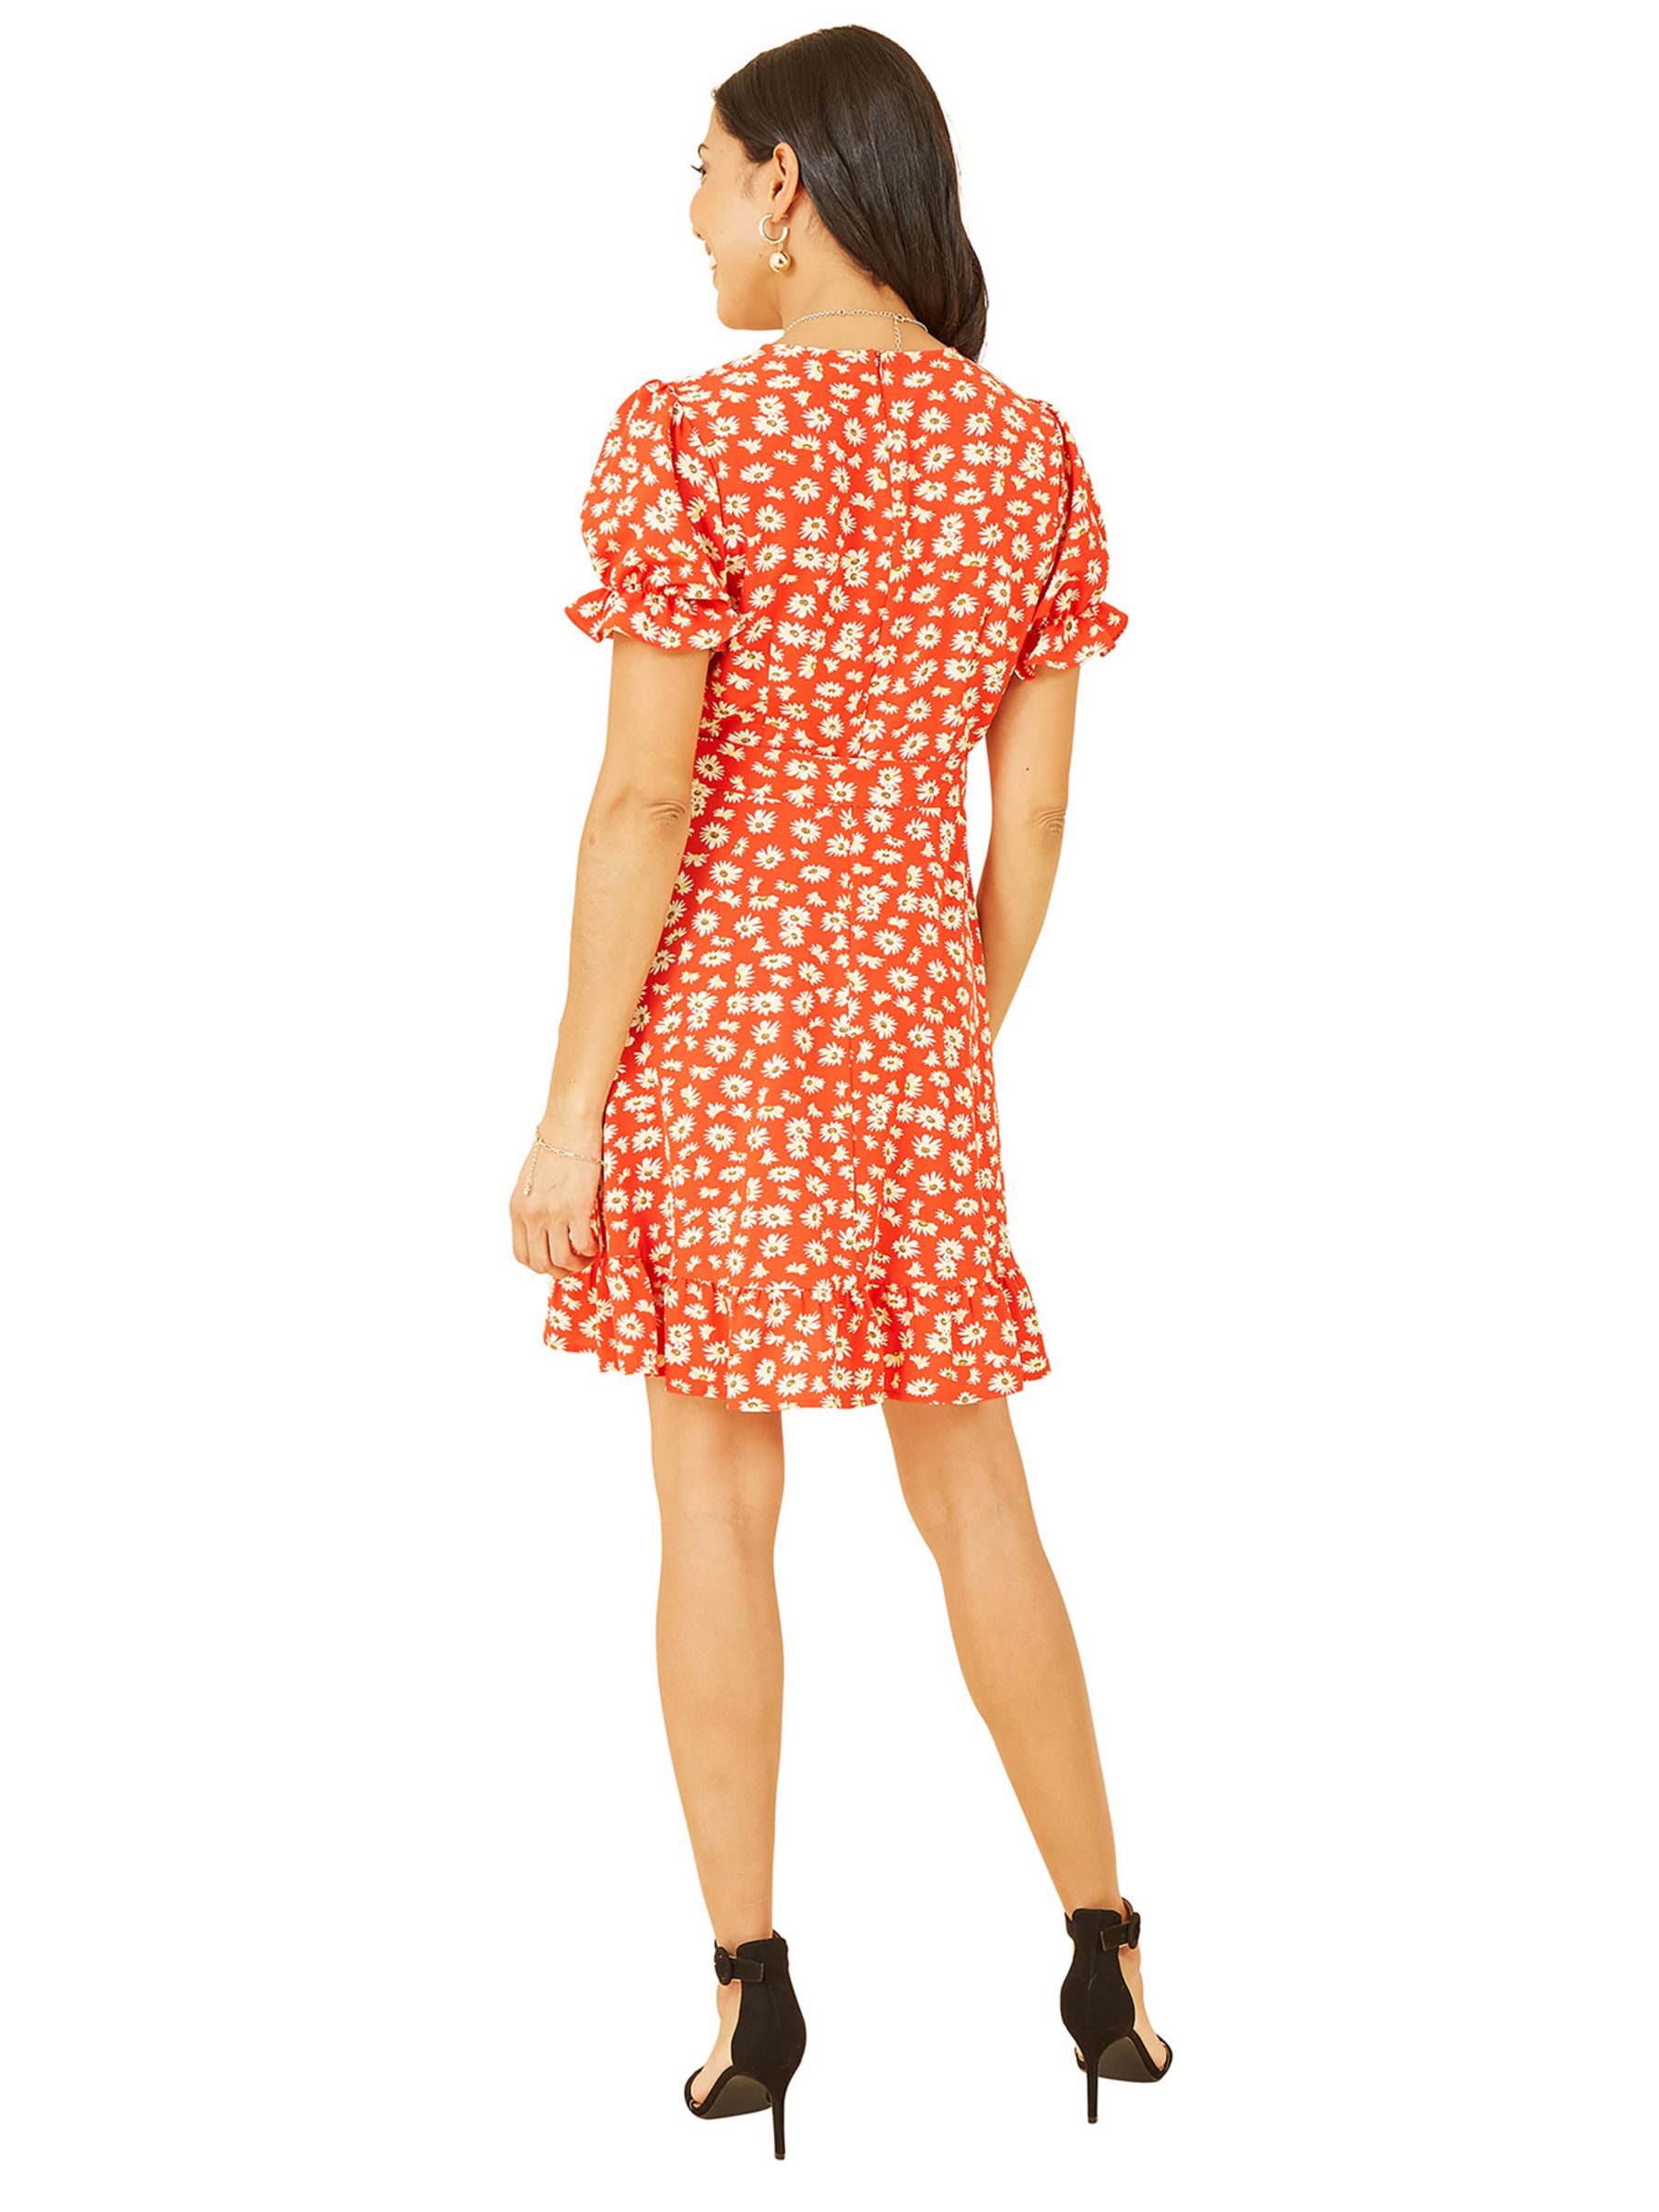 Yumi Mela London Daisy Print Wrap Dress, Red, 8